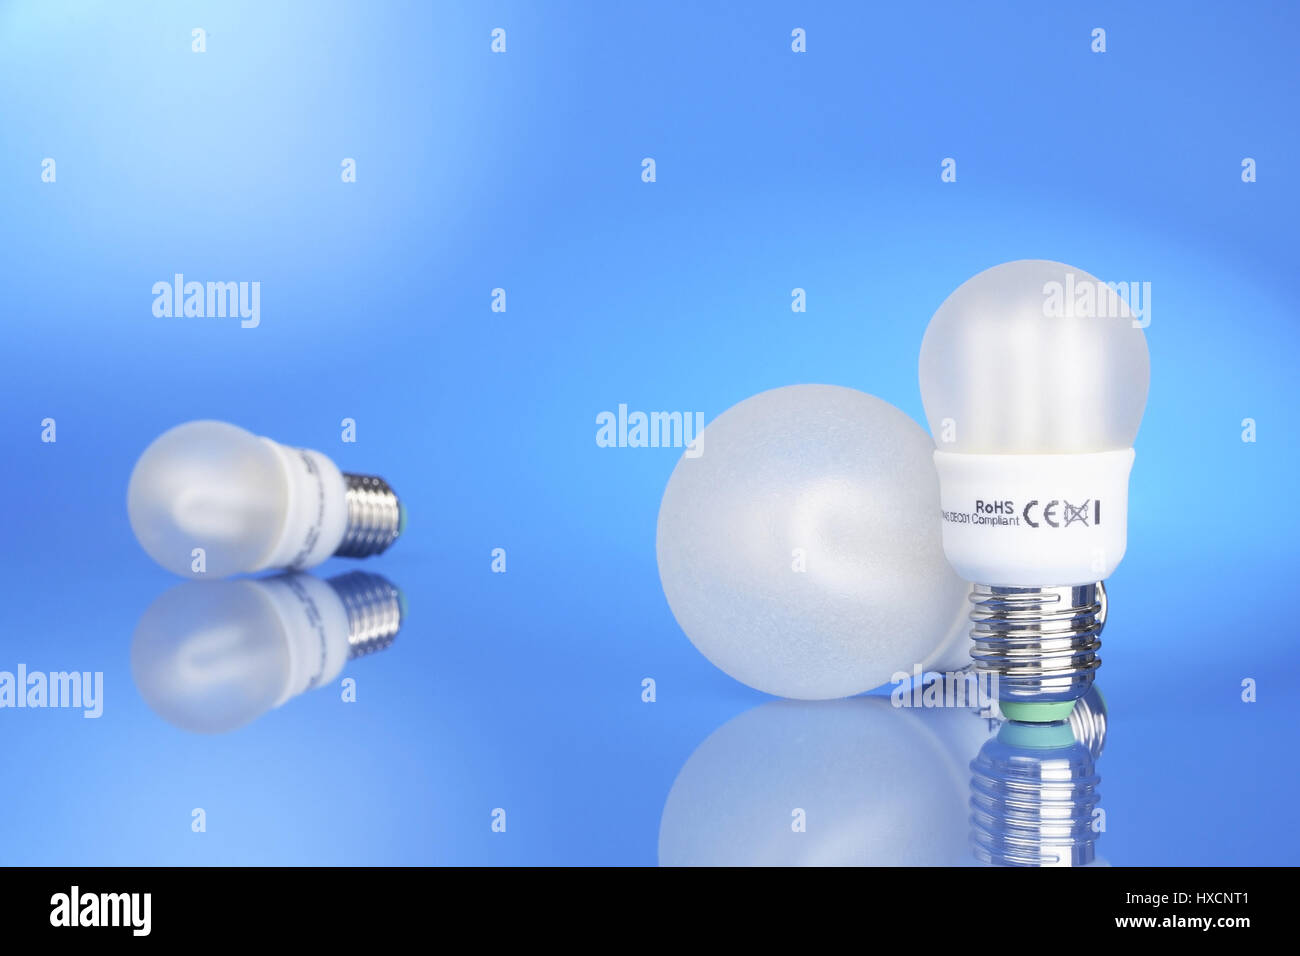 Energy savings lamps, Energiesparlampen Stock Photo